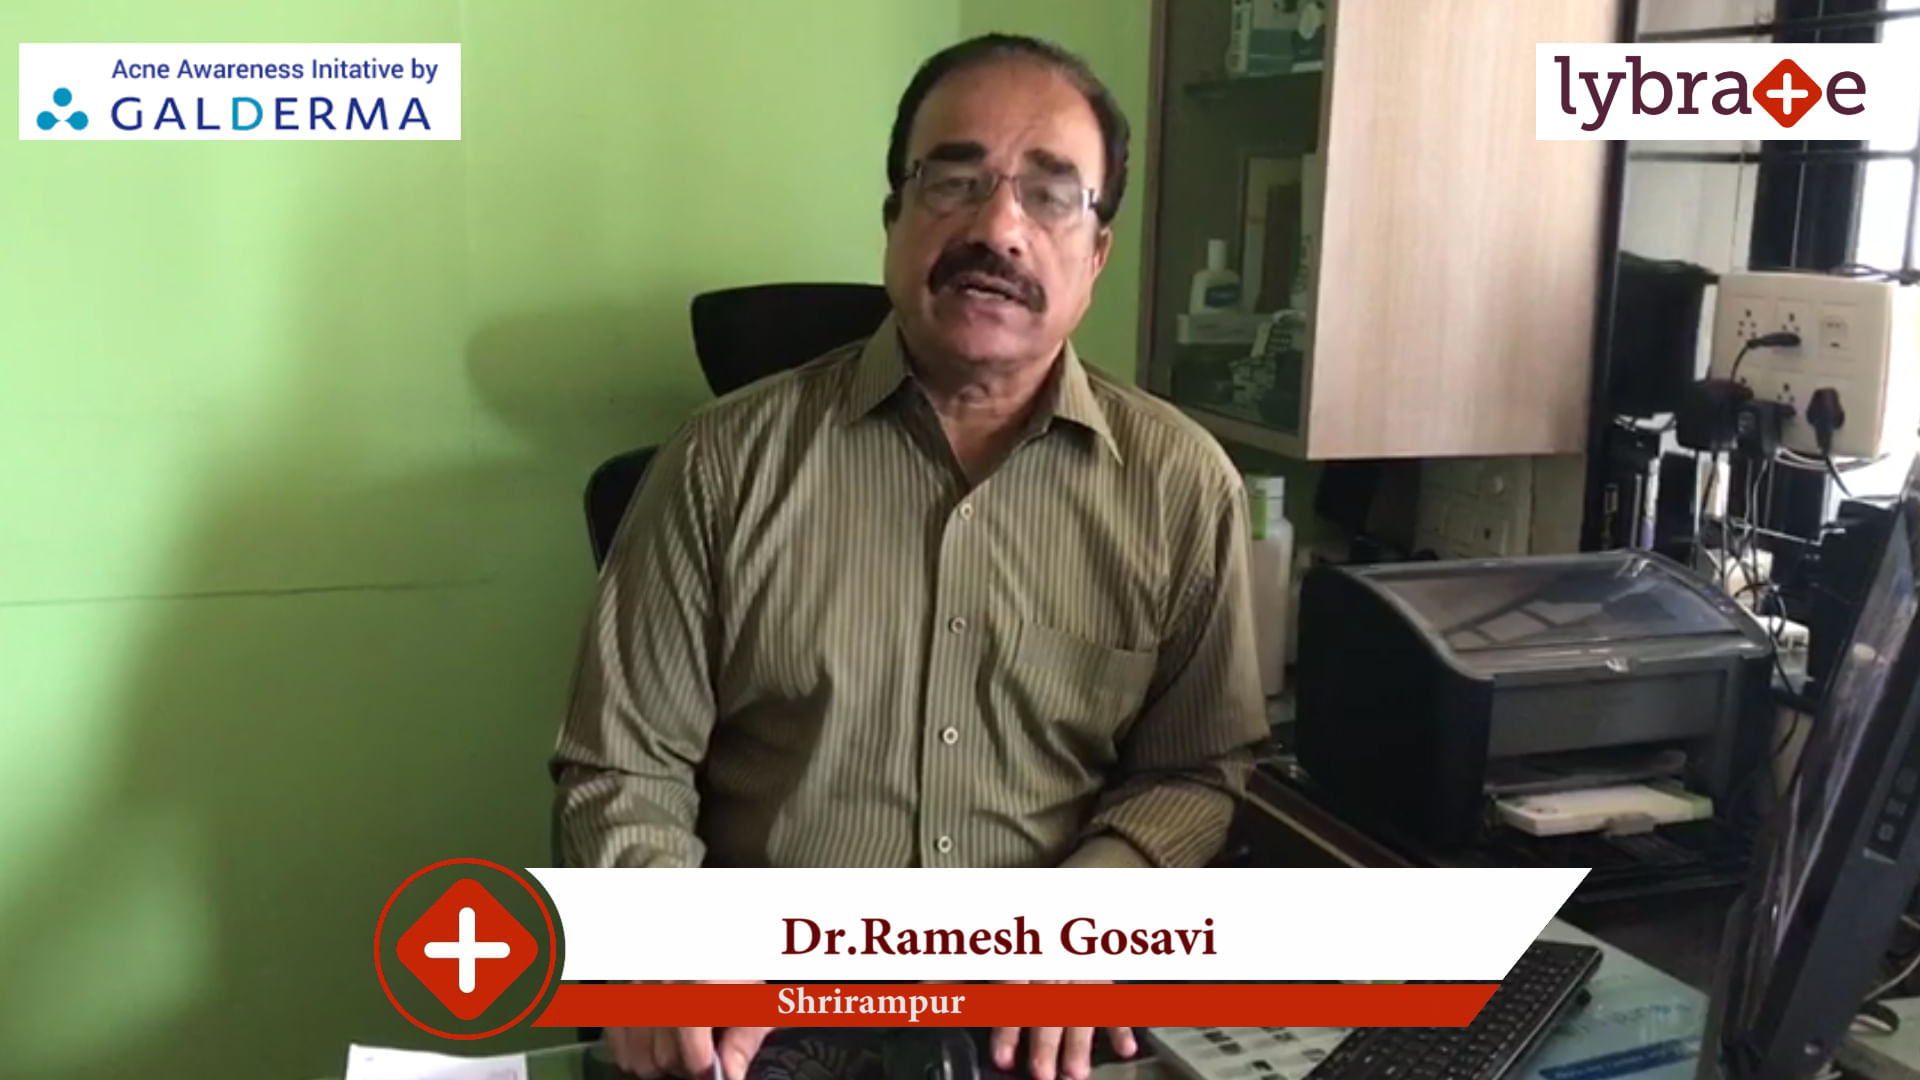 Lybrate | Dr. Ramesh Gosavi speaks on IMPORTANCE OF TREATING ACNE EARLY